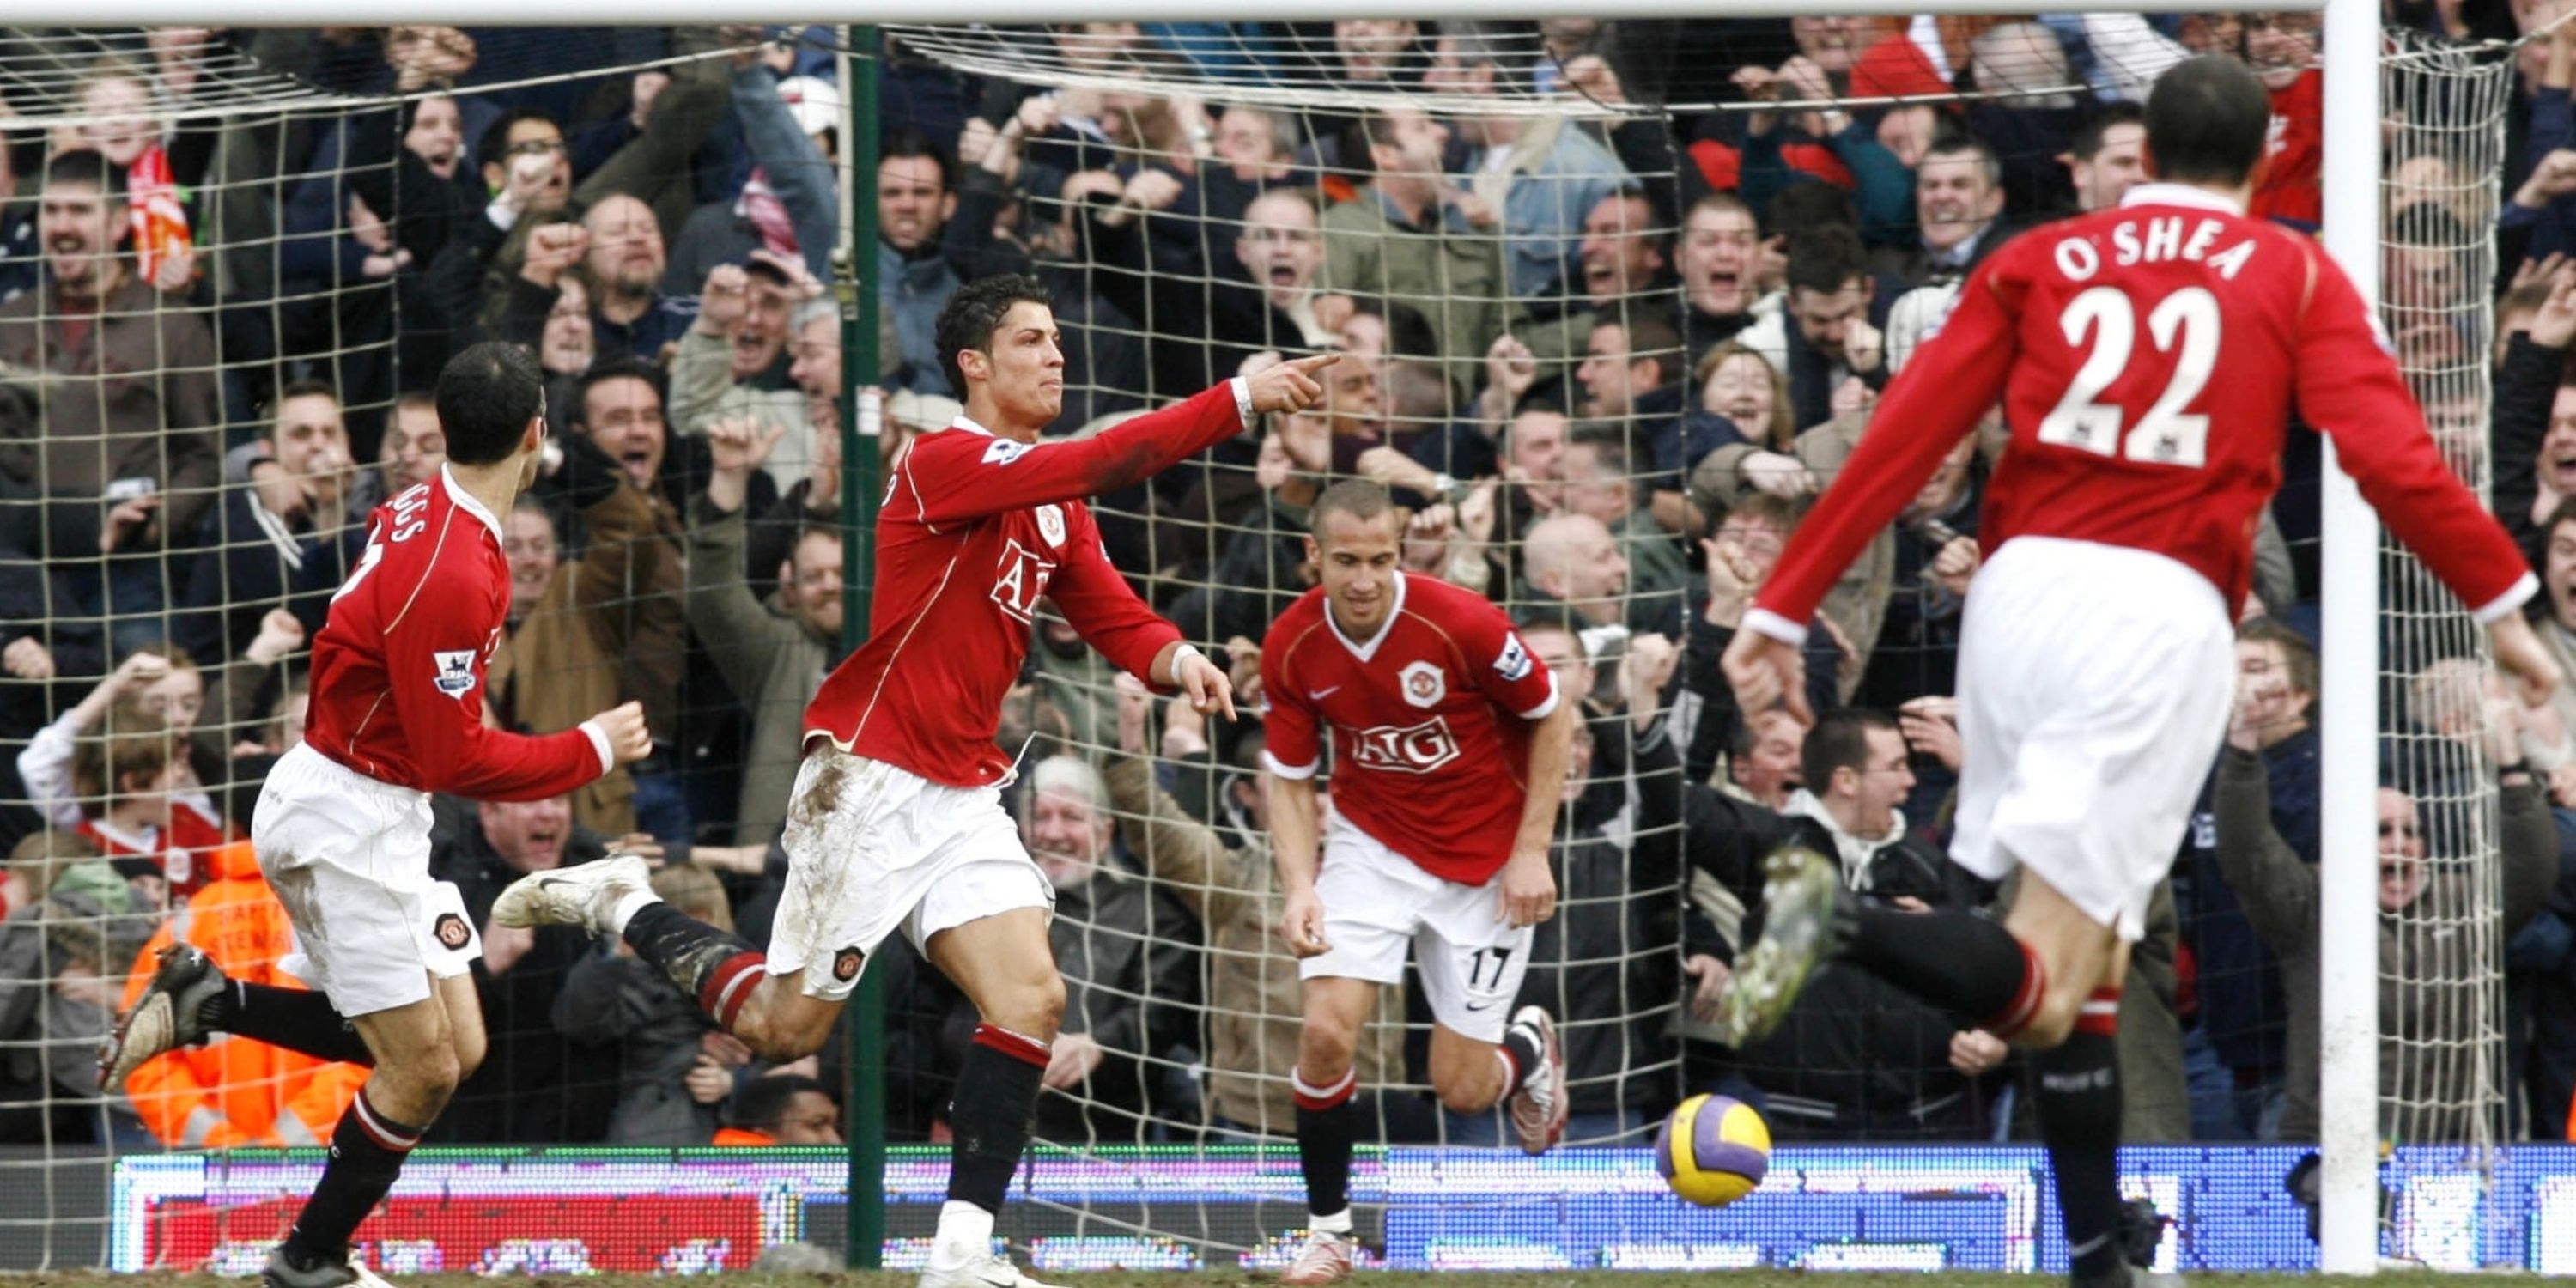 Manchester United's Cristiano Ronaldo celebrates scoring the winner against Fulham.